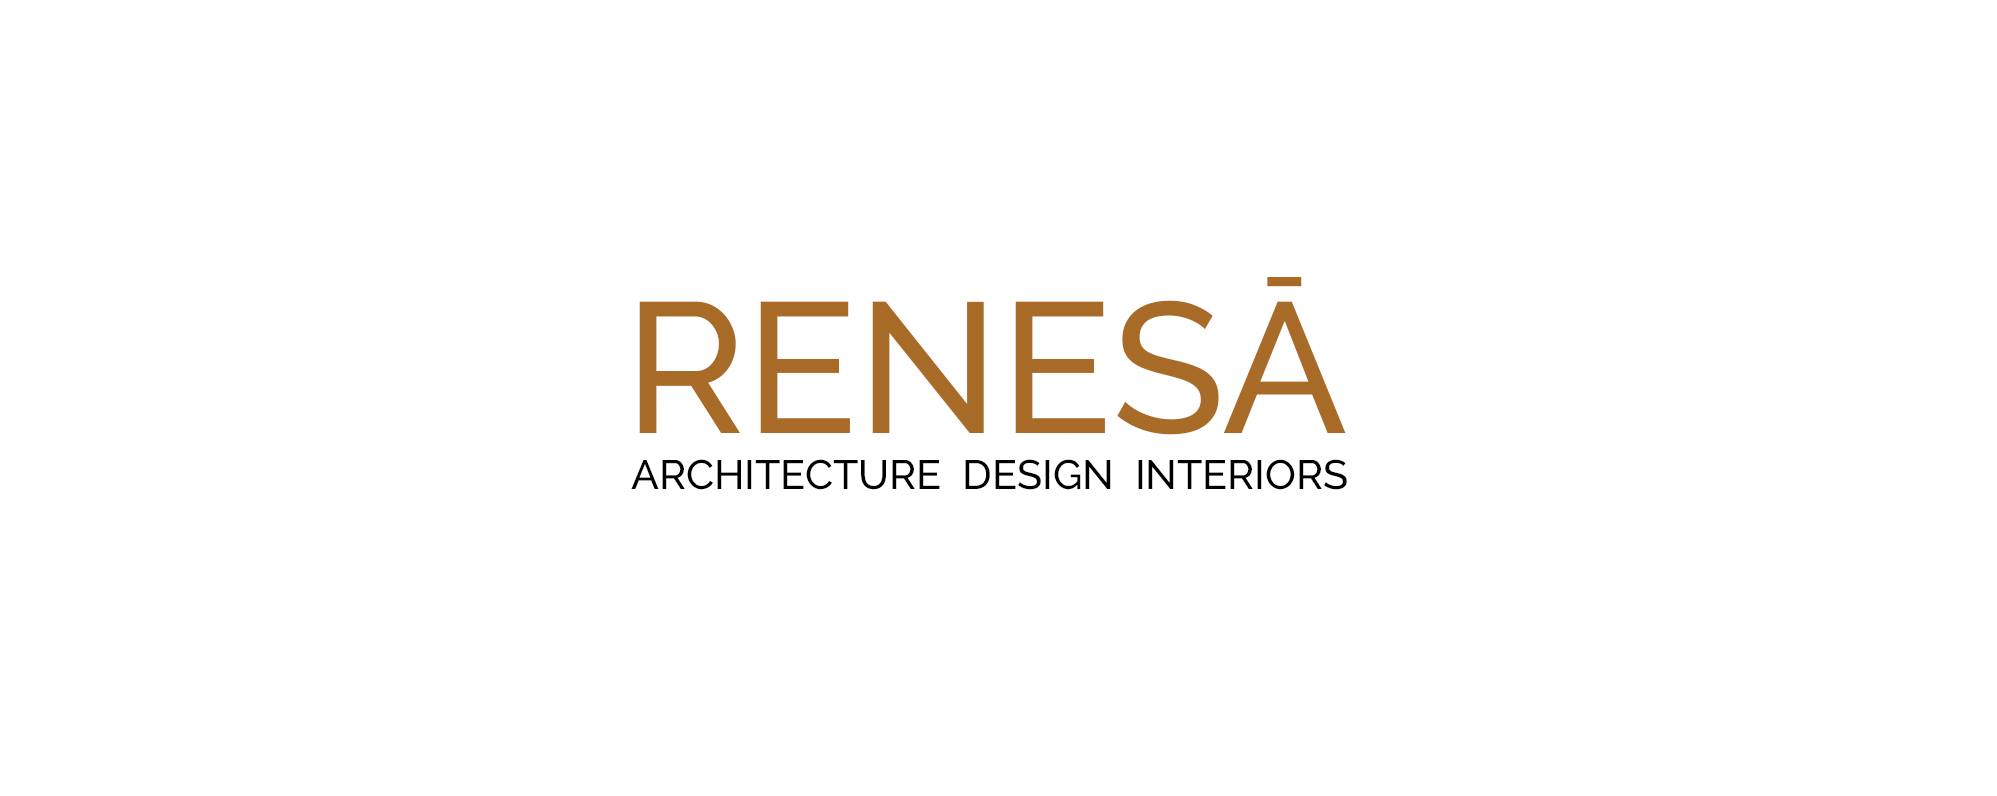 RENESA ARCHITECTURE DESIGN INTERIORS|Architect|Professional Services